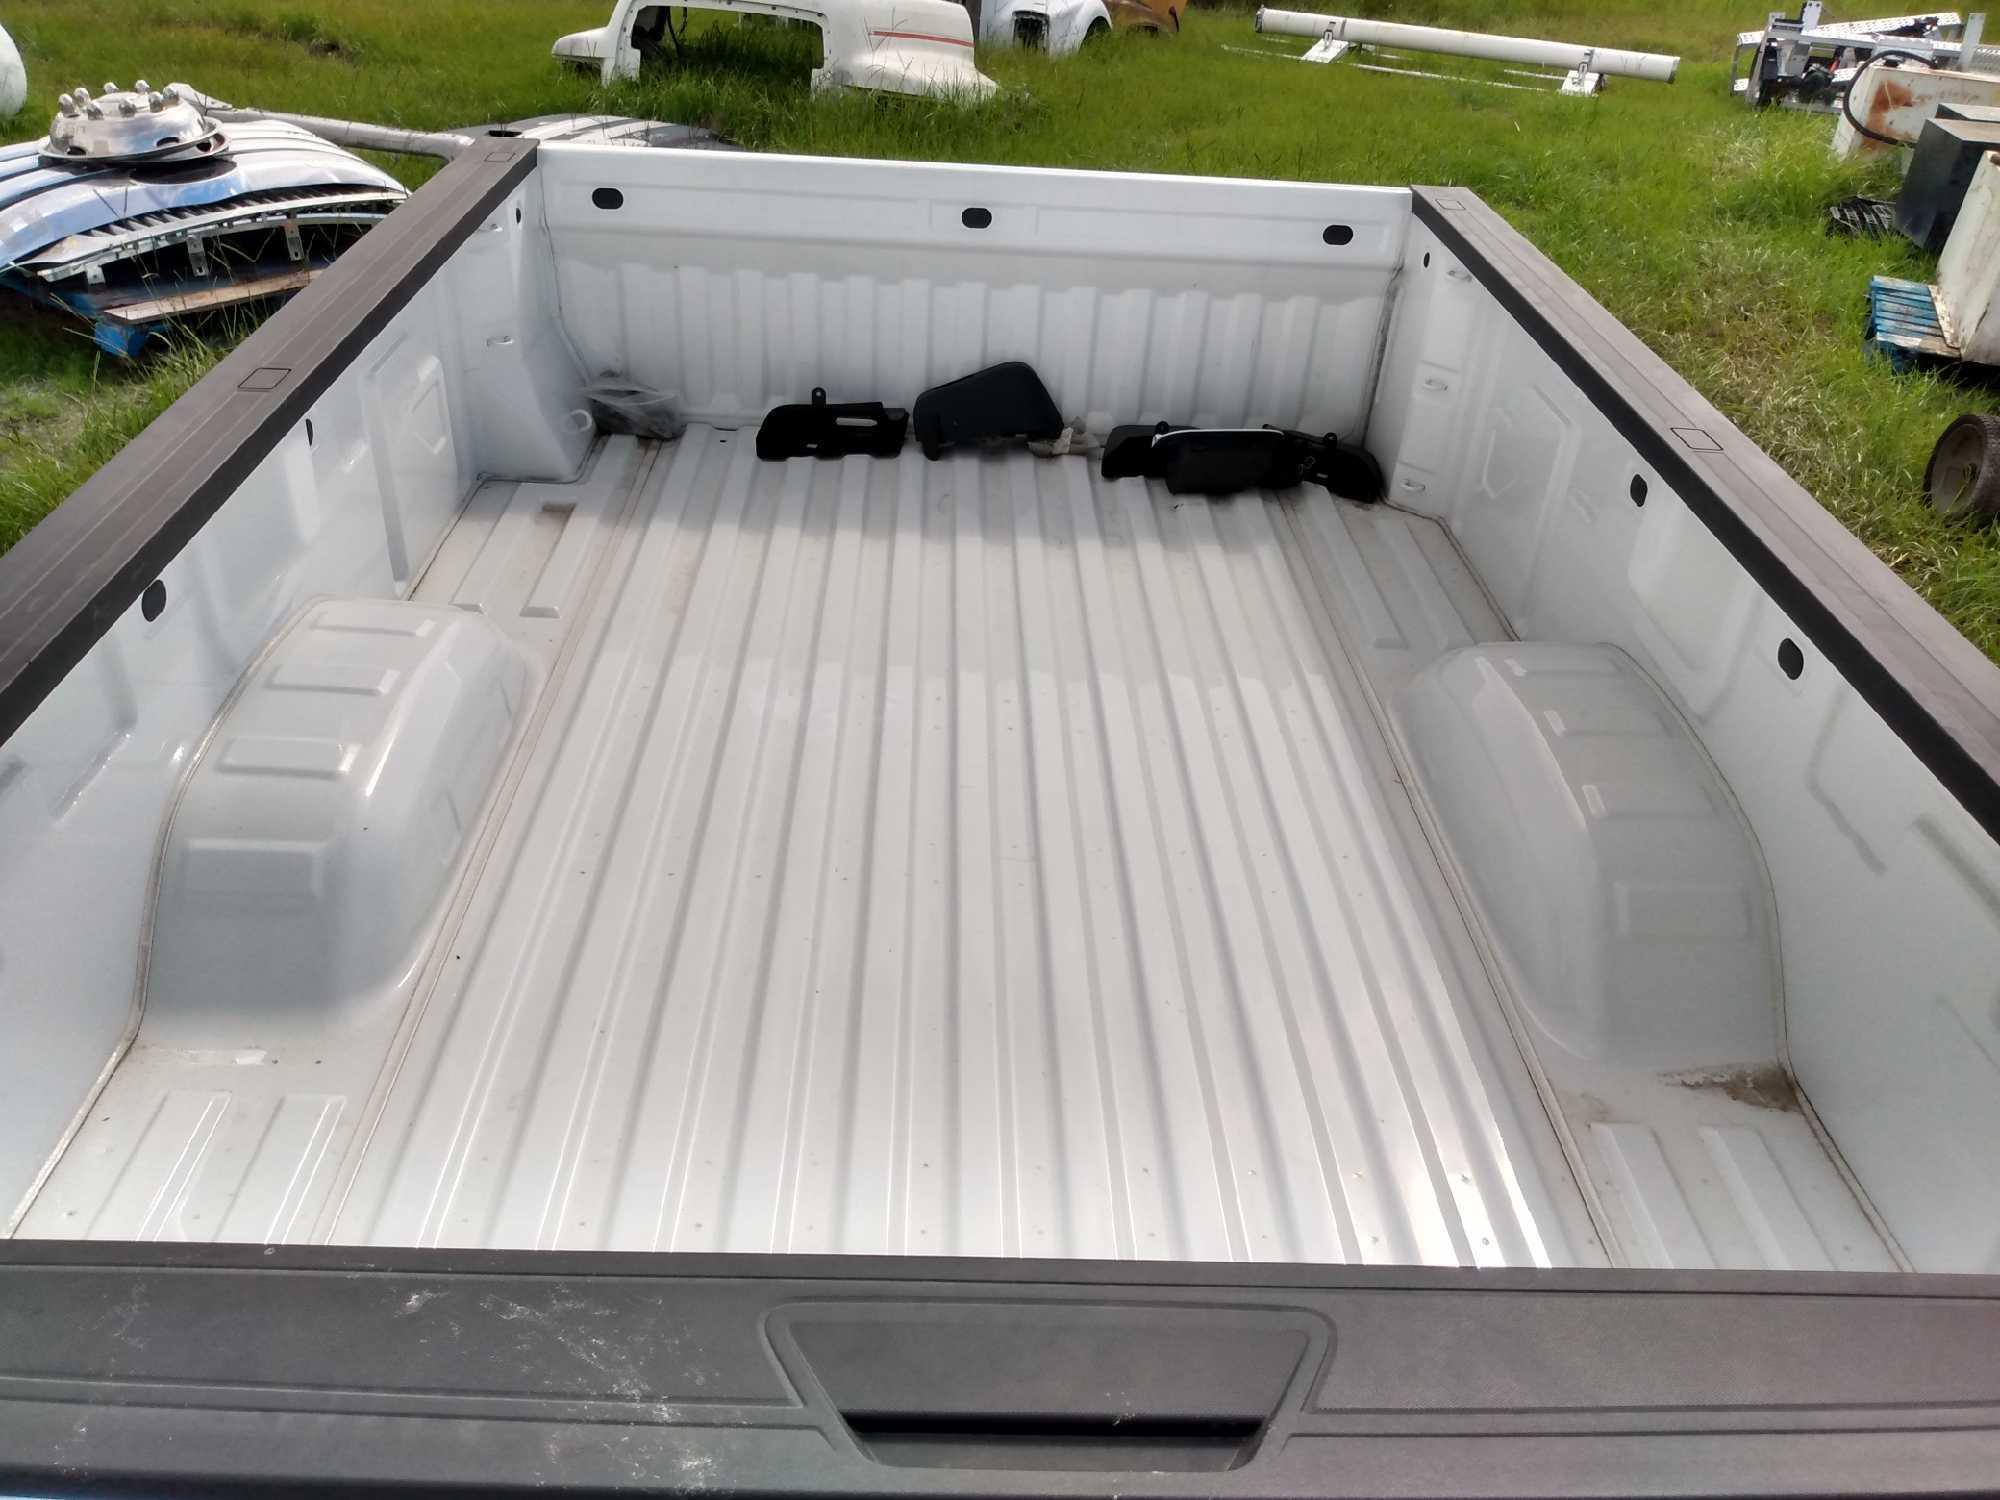 Late Model Chevrolet Silverado Pickup Truck Bed